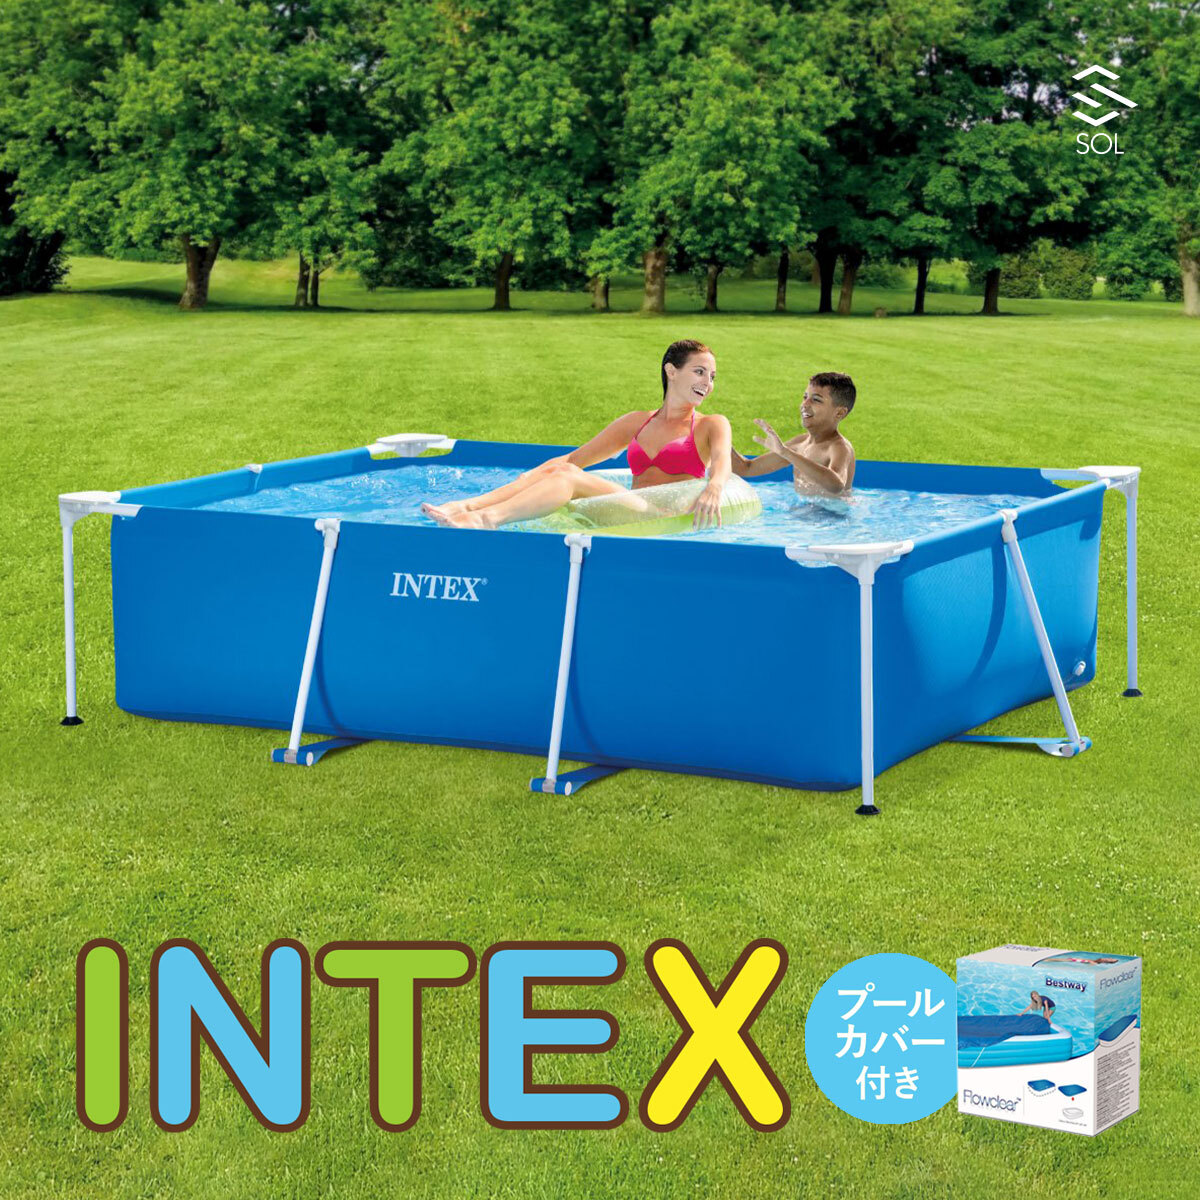 INTEX プール 専用カバー付 大型 正規品 インテックス レクタングラ フレーム 家庭用 プール 強化ビニール3層構造 220cmX150cmX60cm 28270_画像1